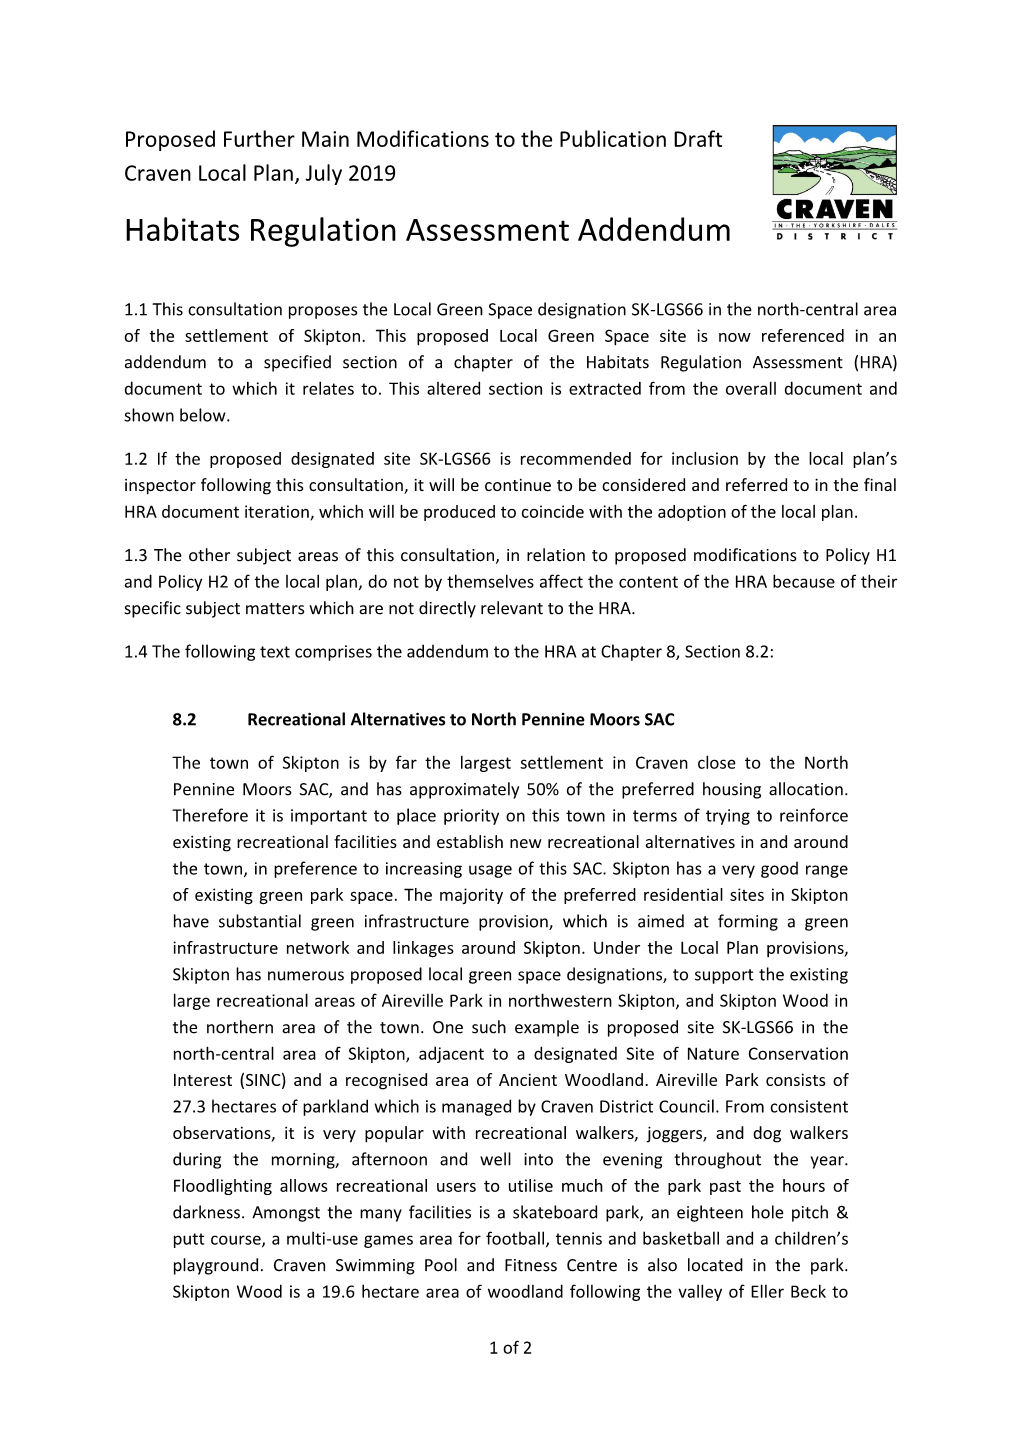 Habitats Regulation Assessment Addendum